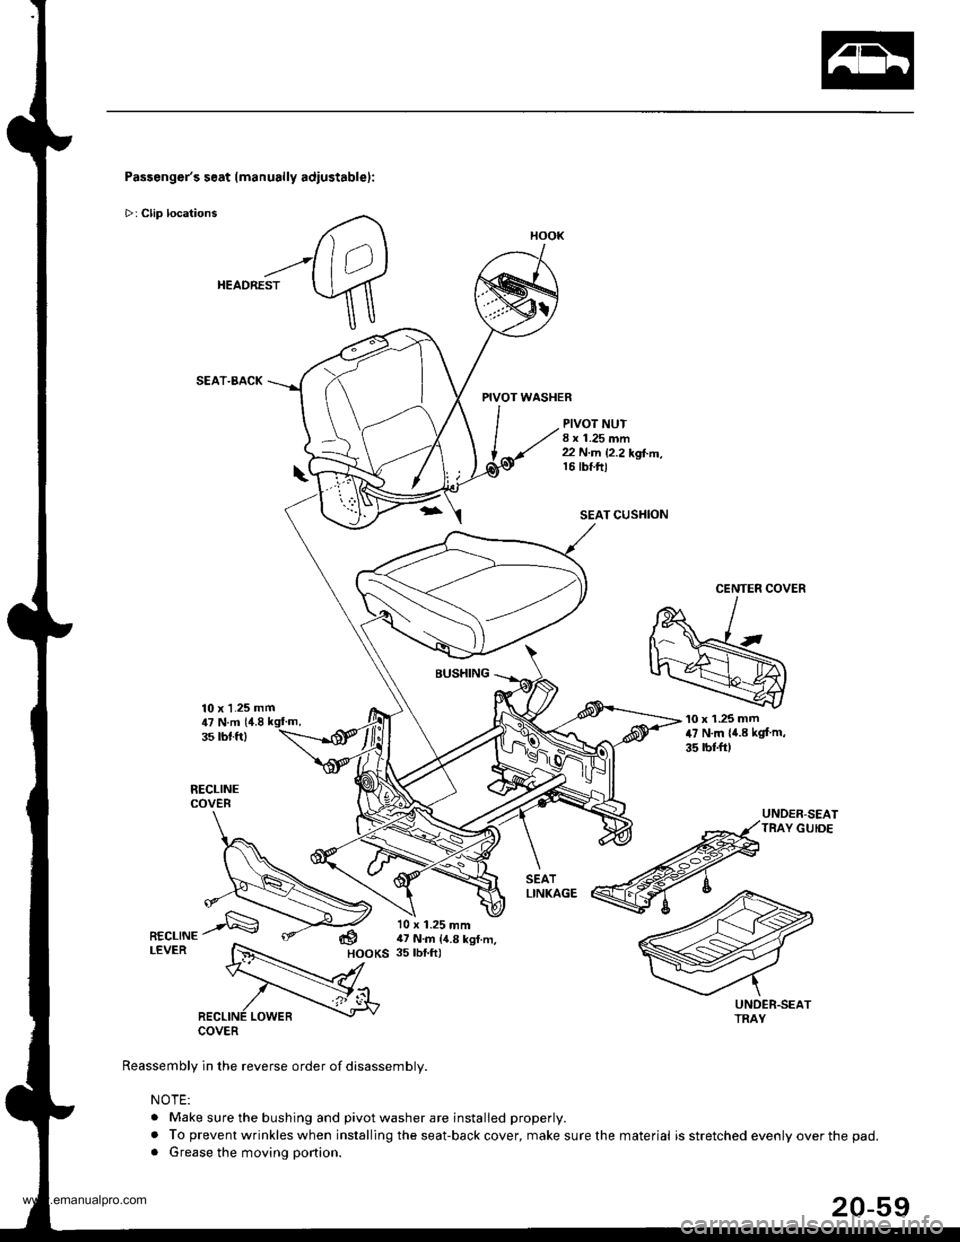 HONDA CR-V 2000 RD1-RD3 / 1.G Workshop Manual 
Passengers seat (manually adiustablel:
>: Clip locations
HEADREST
SEAT.BACK
10 x 1.25 mm
PIVOT WASHER
PIVOT NUT8 x 1.25 mm22 N.m 12.2 kgl..n,16 tbt.ftl
SEAT CUSHION
CENTER COVER
BUSHING
COVER
Reasse